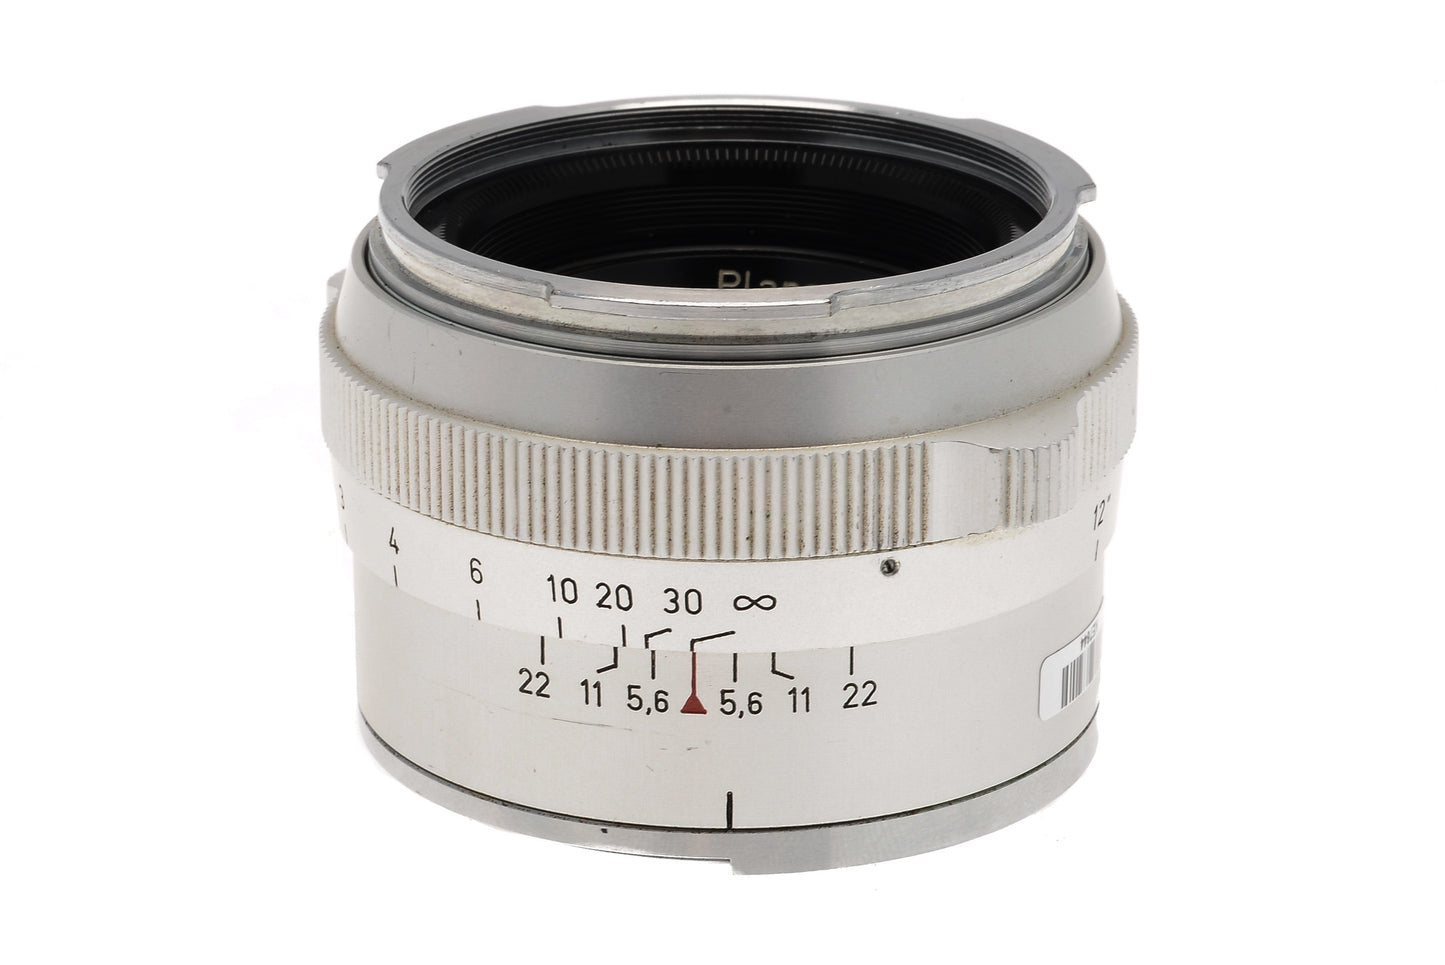 Carl Zeiss 50mm f2 Planar - Lens